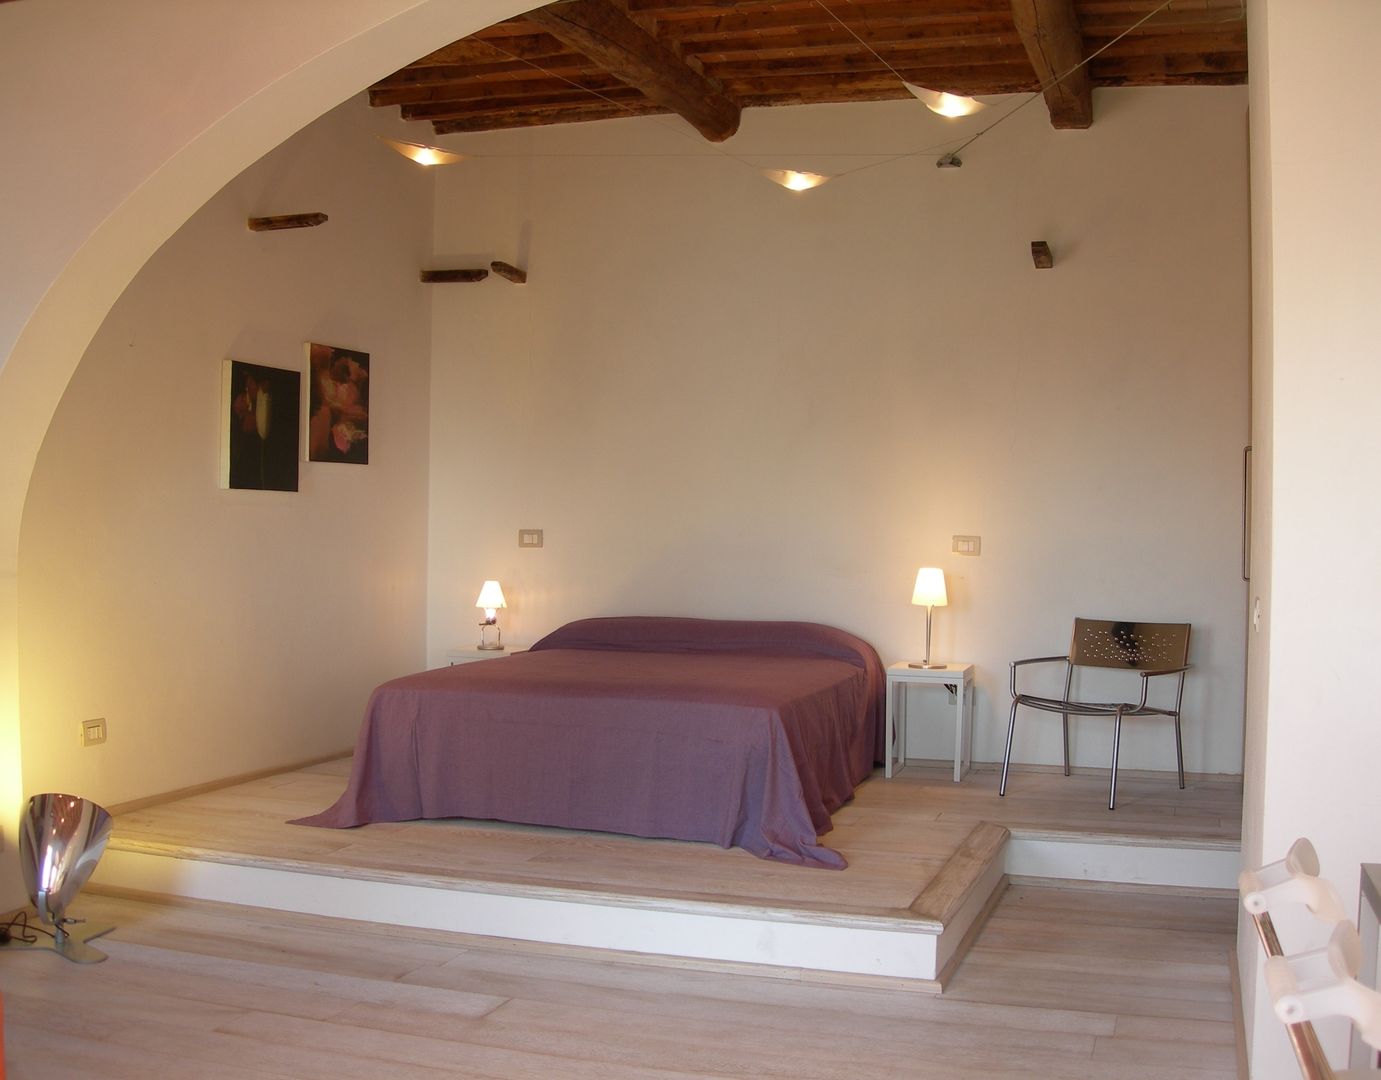 Casa per vacanze a Chiessi (Isola d'Elba) - Italy, 70m2 Studio di architettura 70m2 Studio di architettura Mediterranean style bedroom